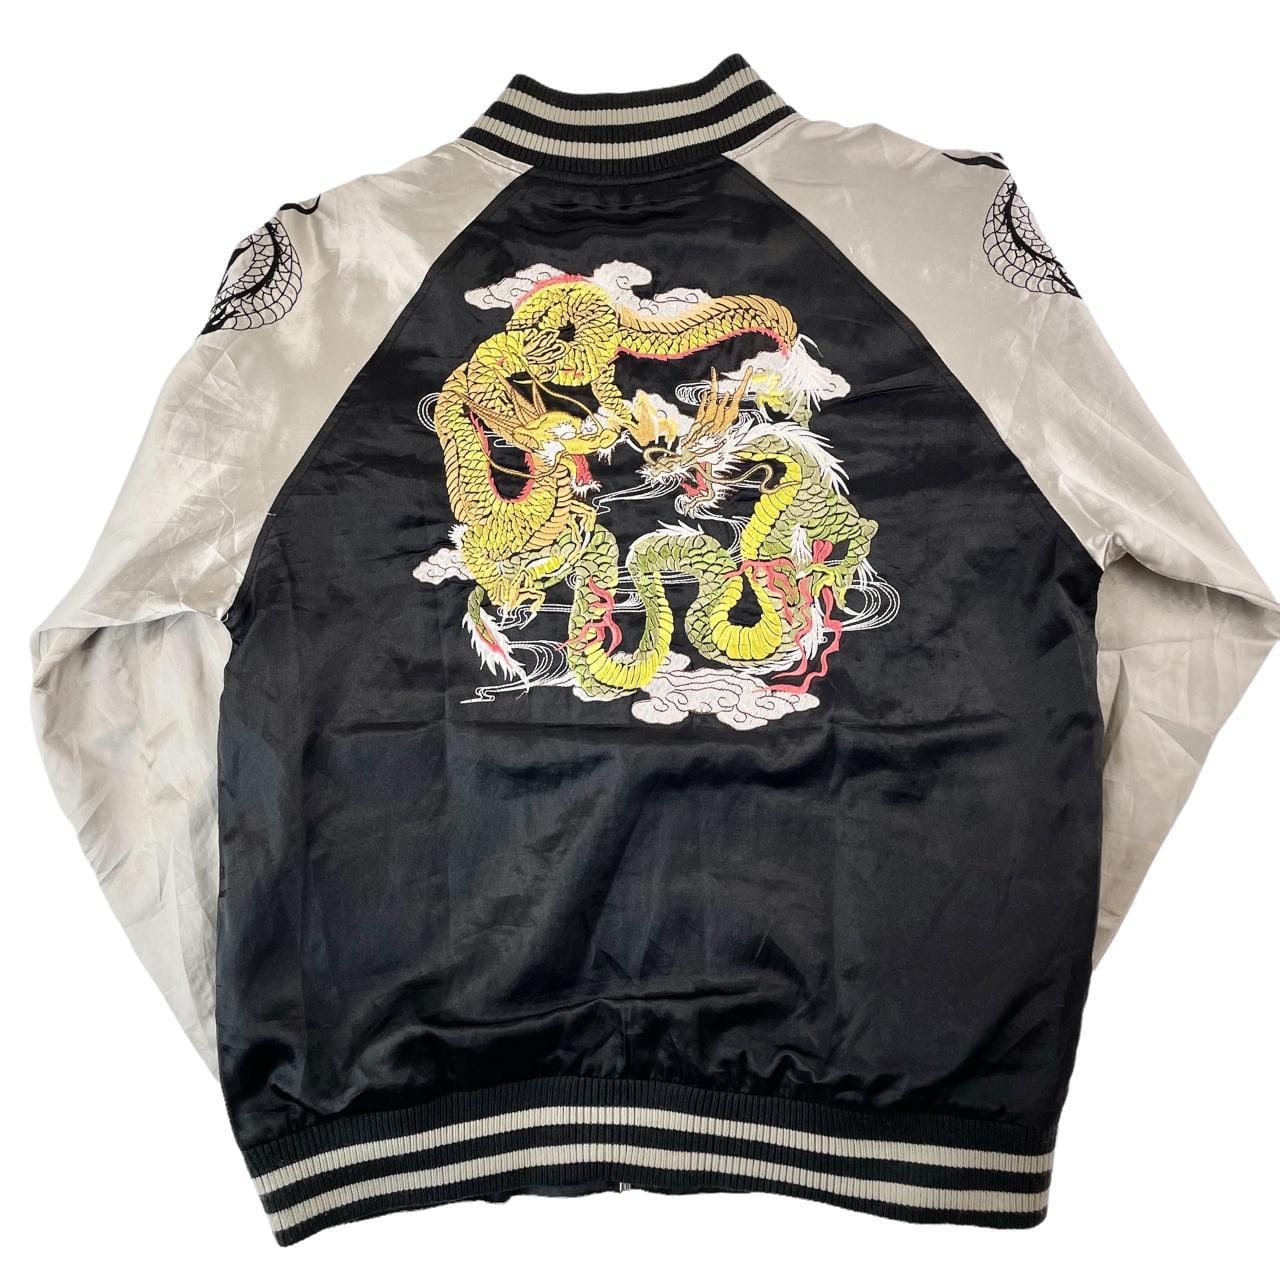 Japanese Souvenir Jacket, M